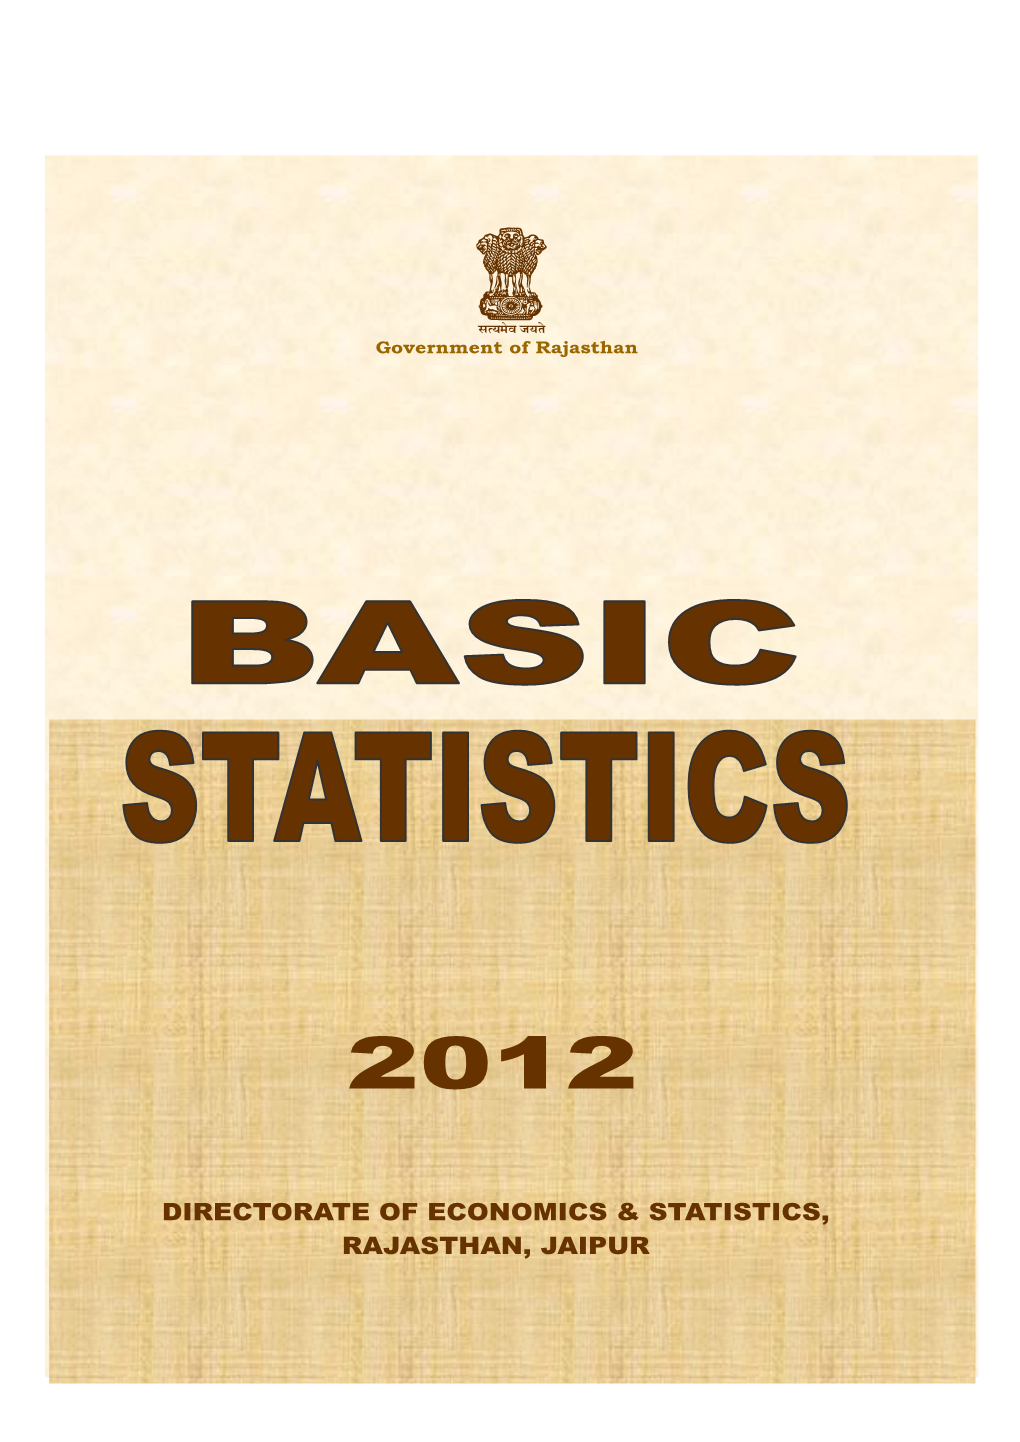 Directorate of Economics & Statistics Rajasthan, Jaipur